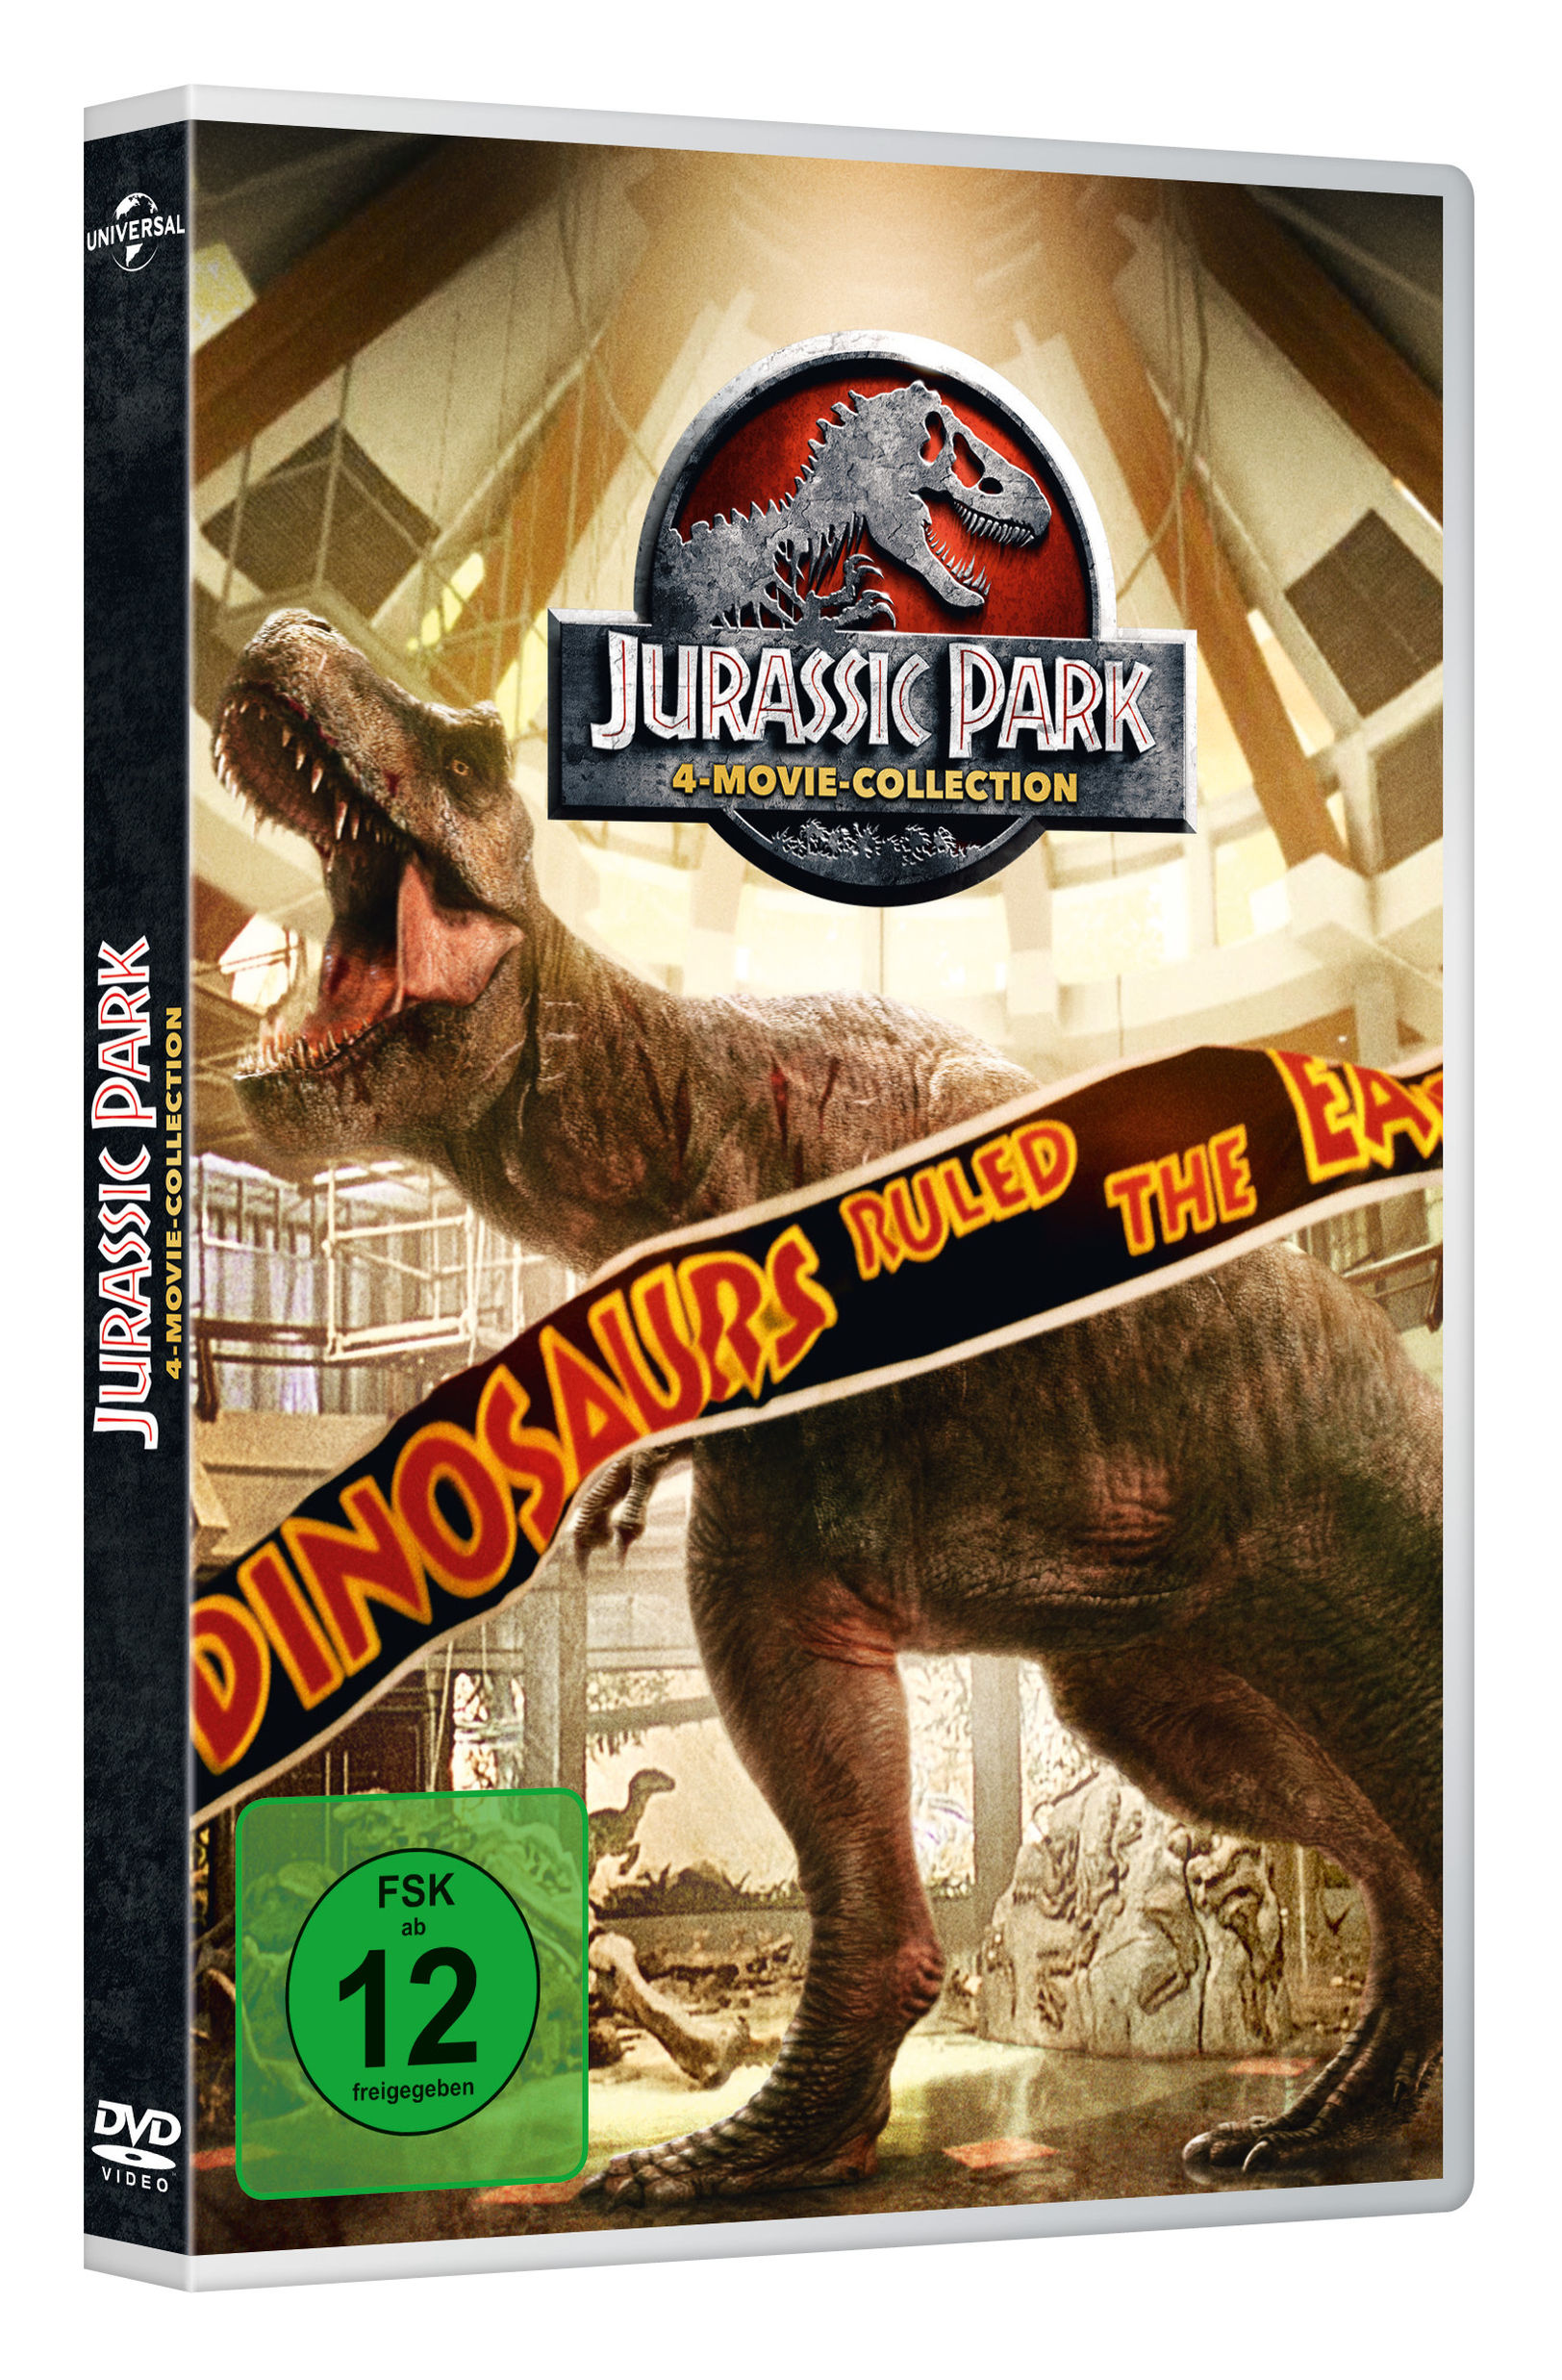 Jurassic Park Collection DVD bei Weltbild.at bestellen